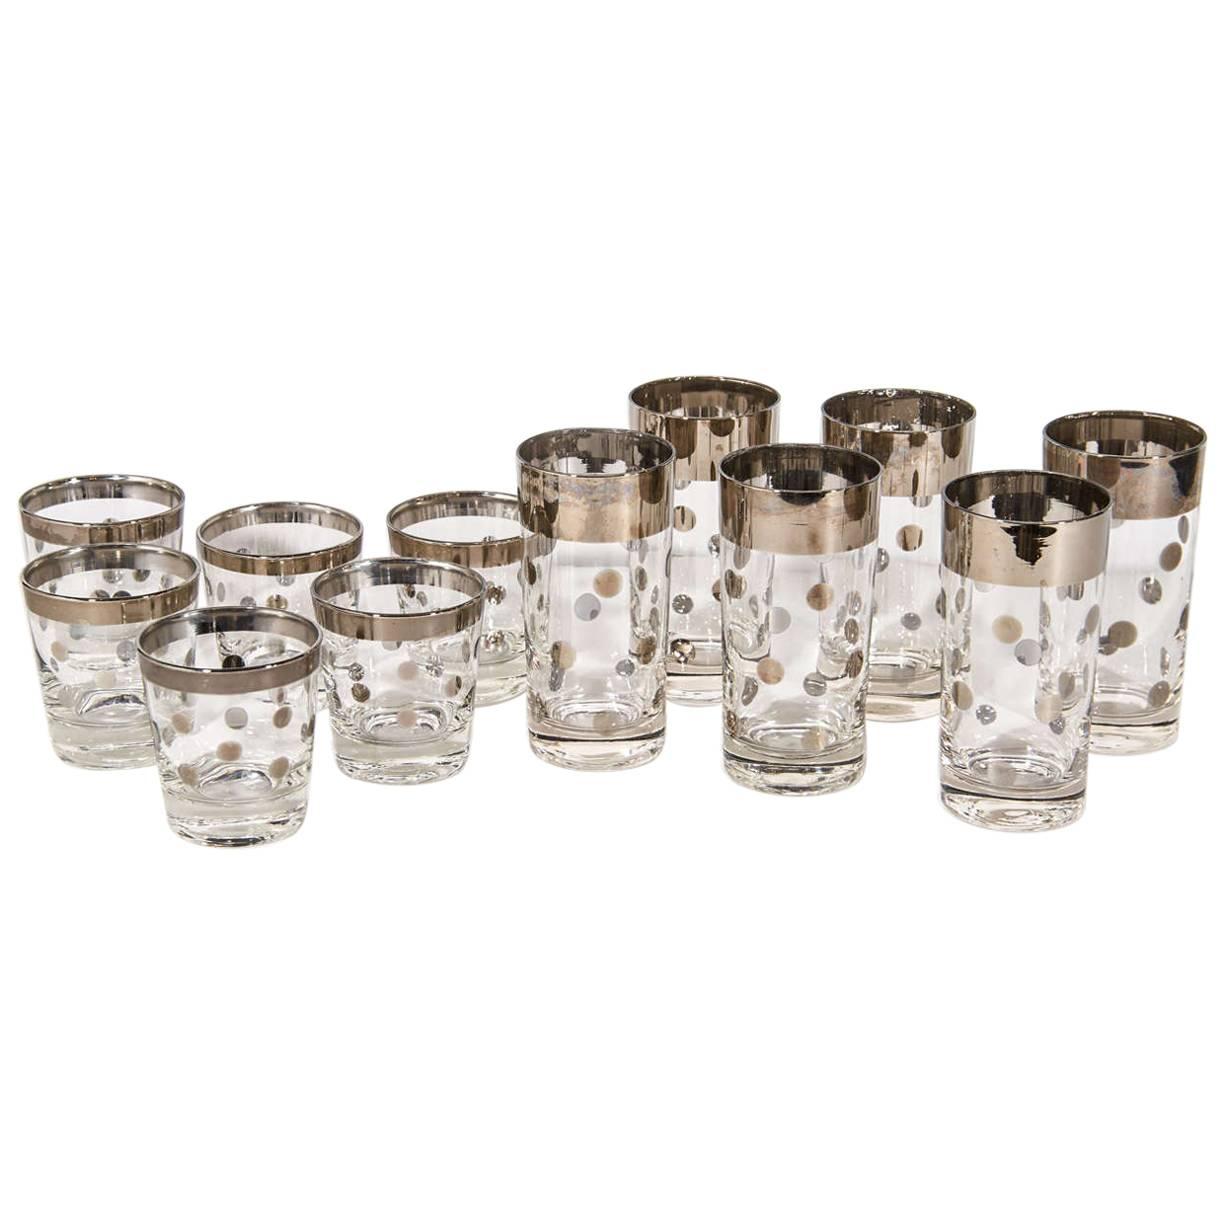 Set of 12 Dorothy Thorpe Barware Glasses with Polka Dot Design